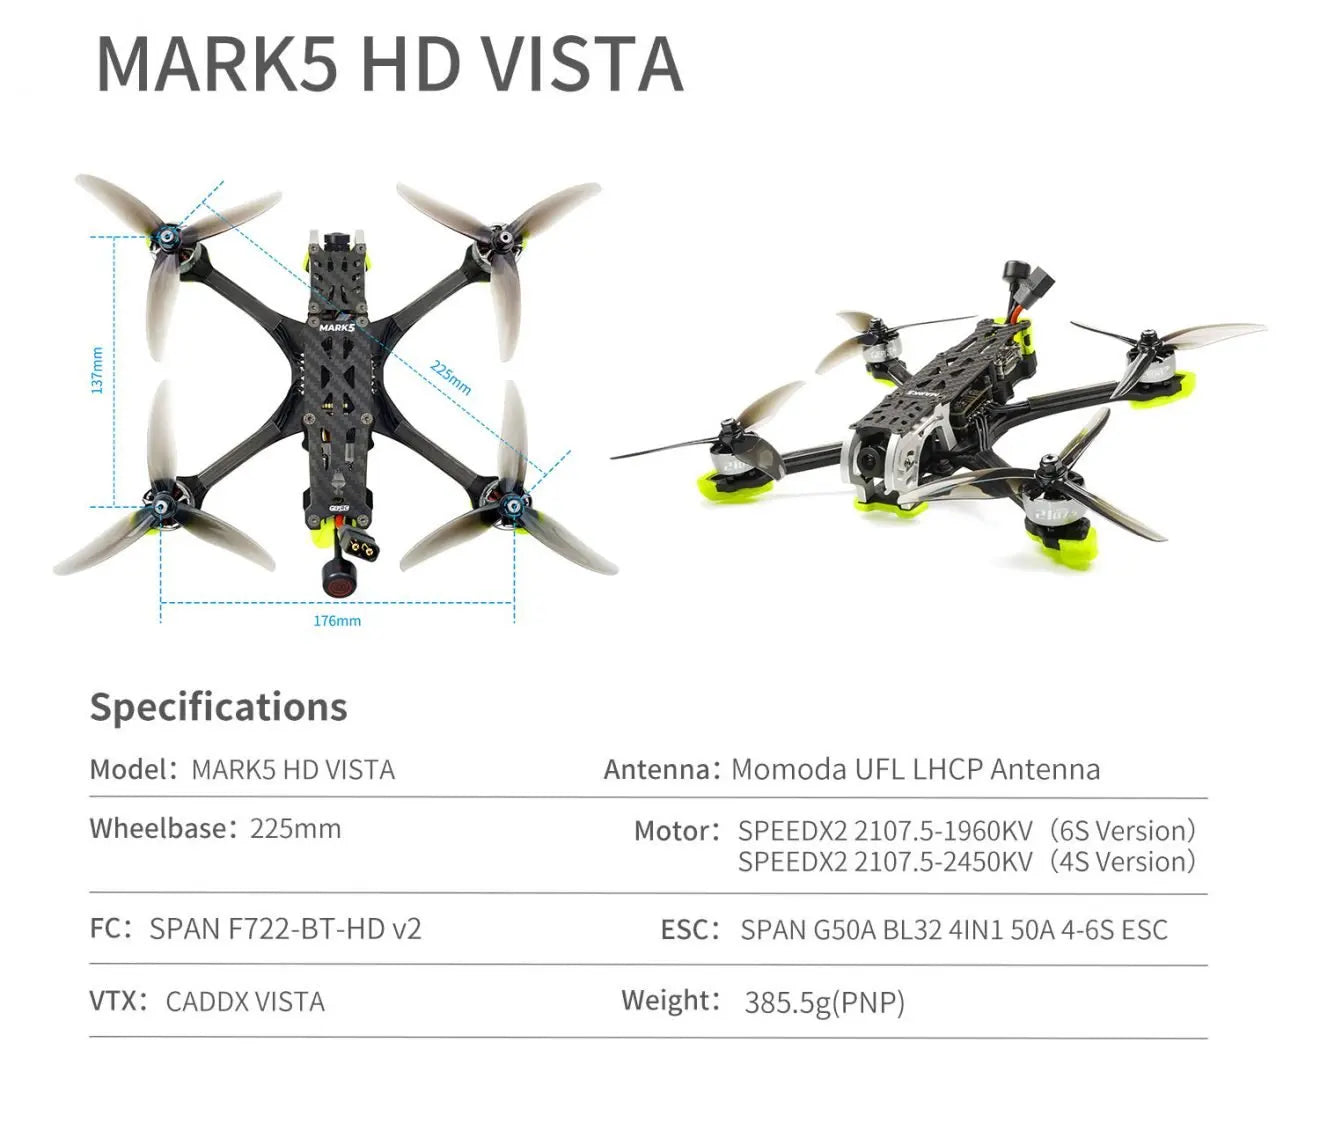 MARK5 HD AVATAR Freestyle FPV Drone, MARKS HD VISTA Enti 1 176mm Specifications Model: MAR